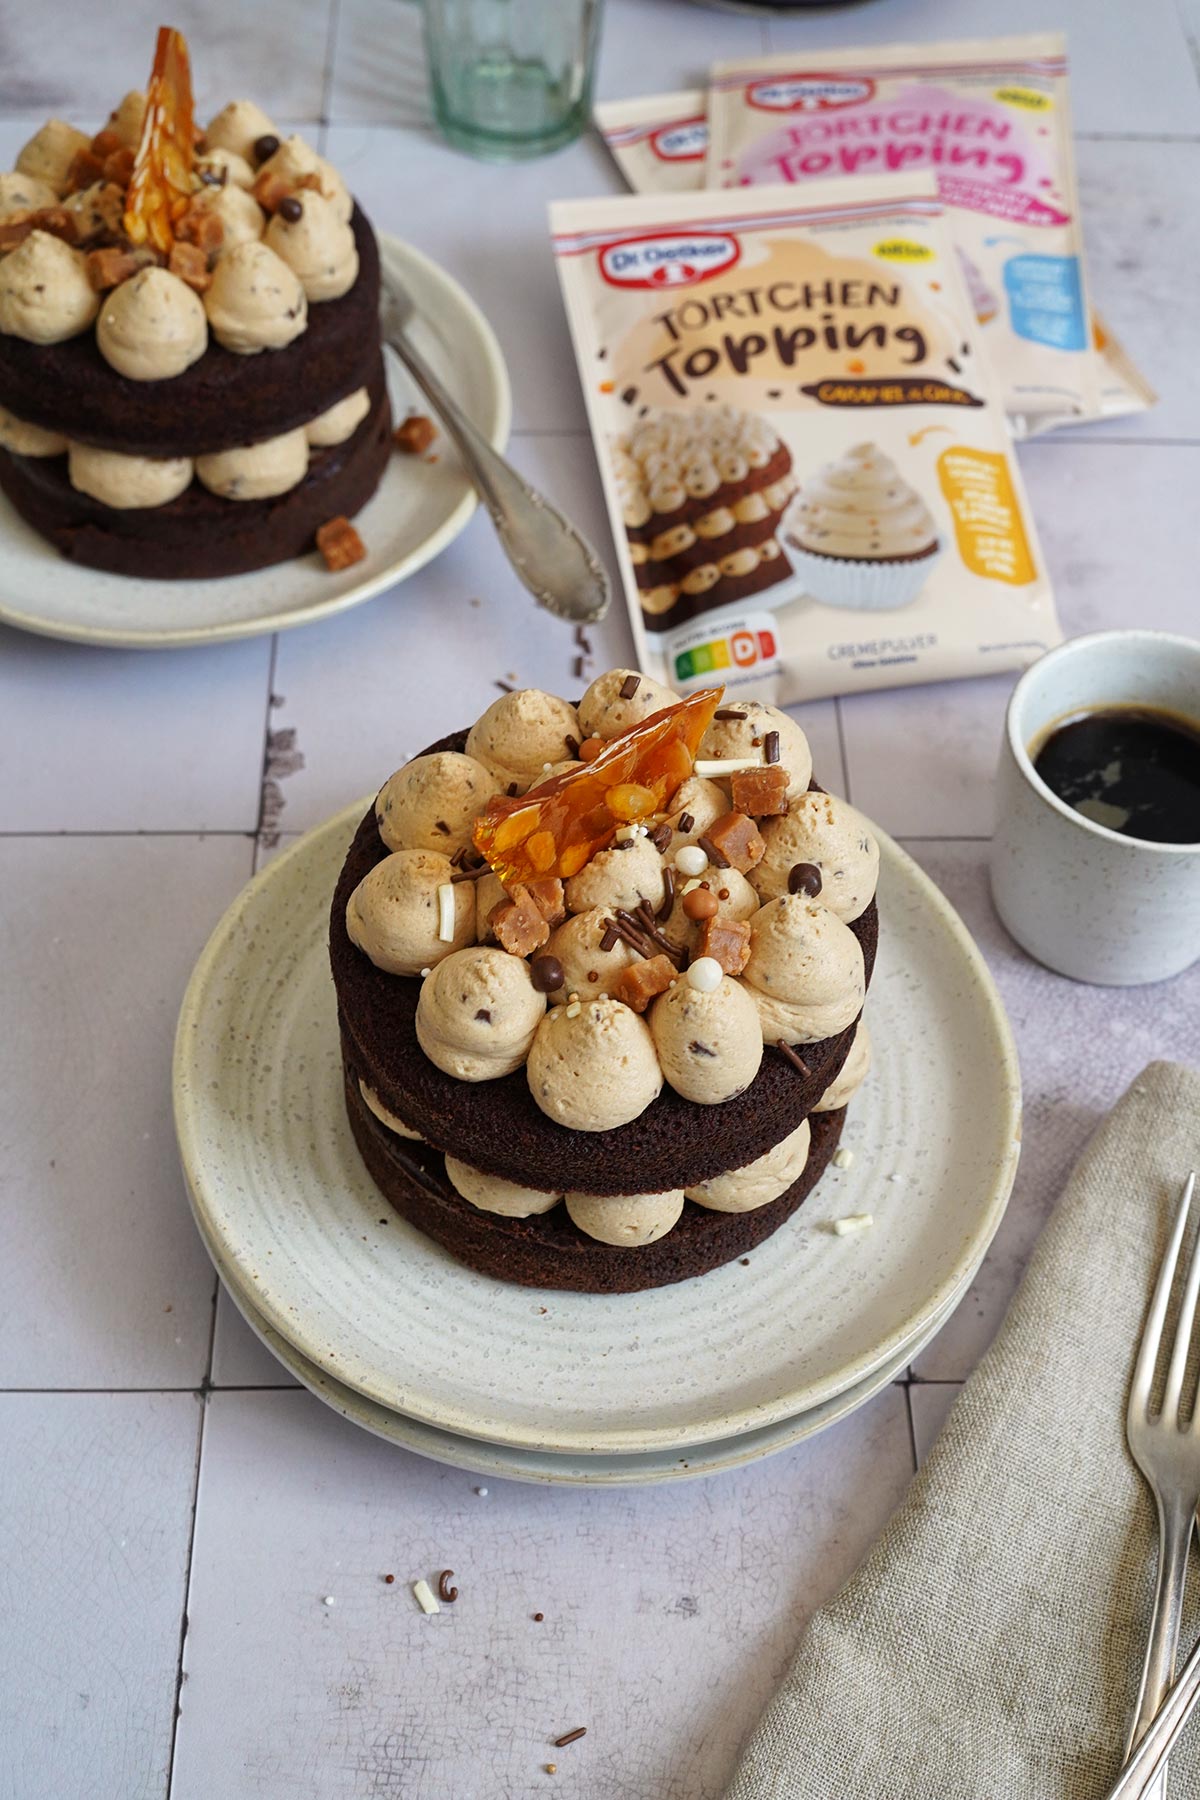 Schokolade & Karamell Mini Kuchen | Bake to the roots